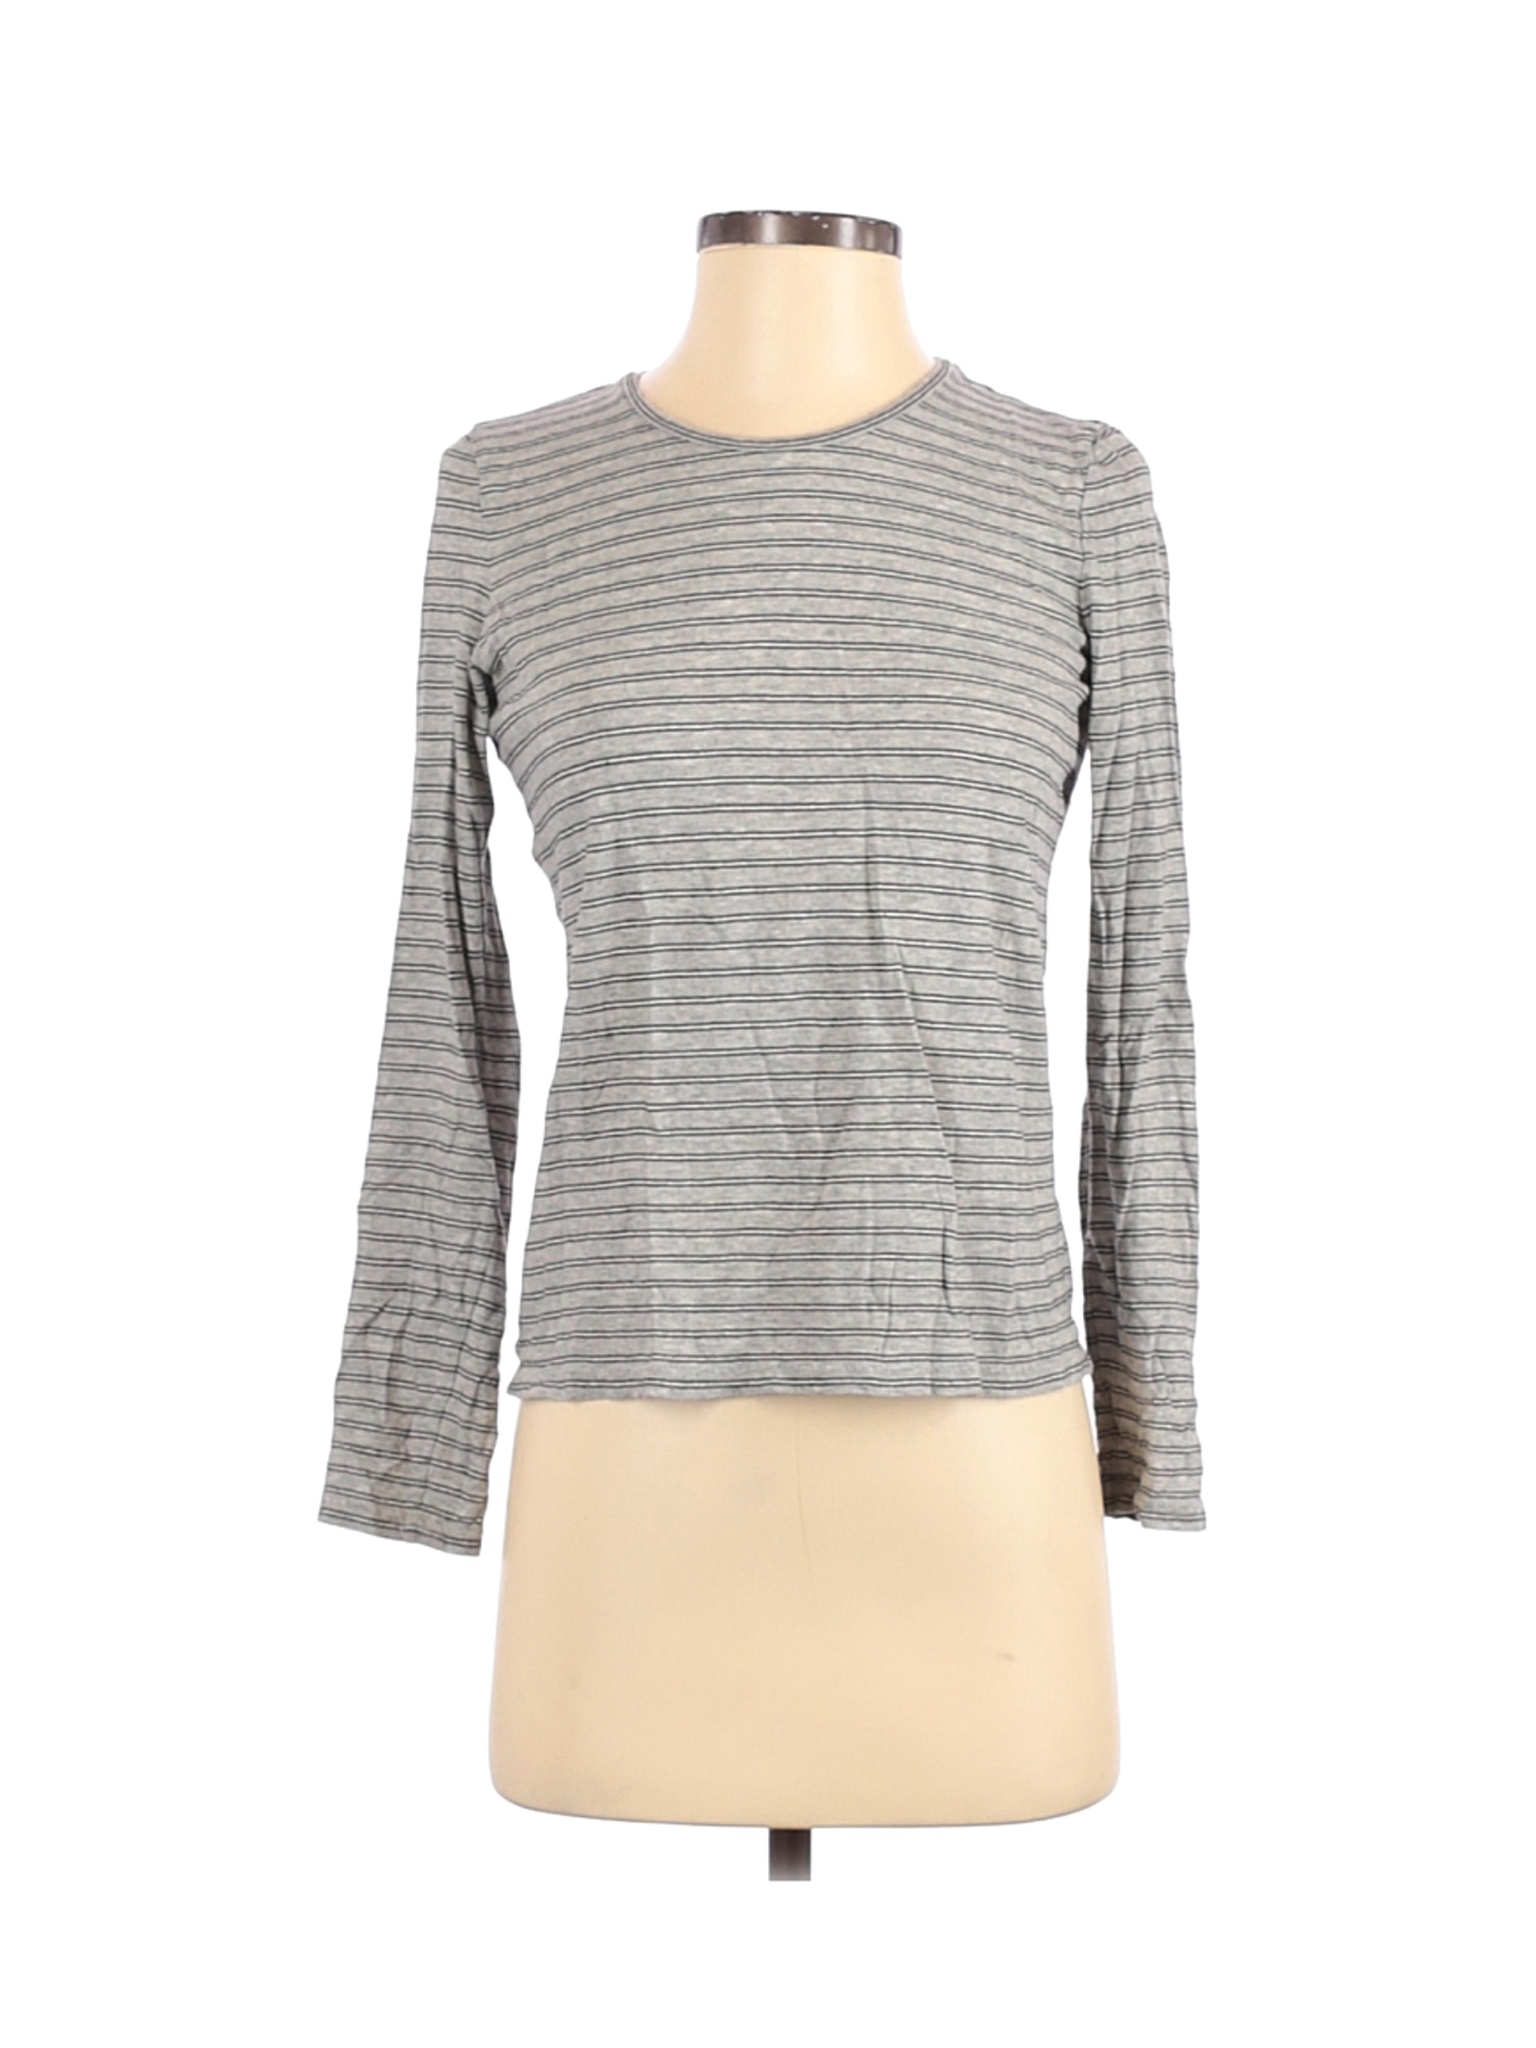 Everlane Women Gray Long Sleeve T-Shirt S | eBay